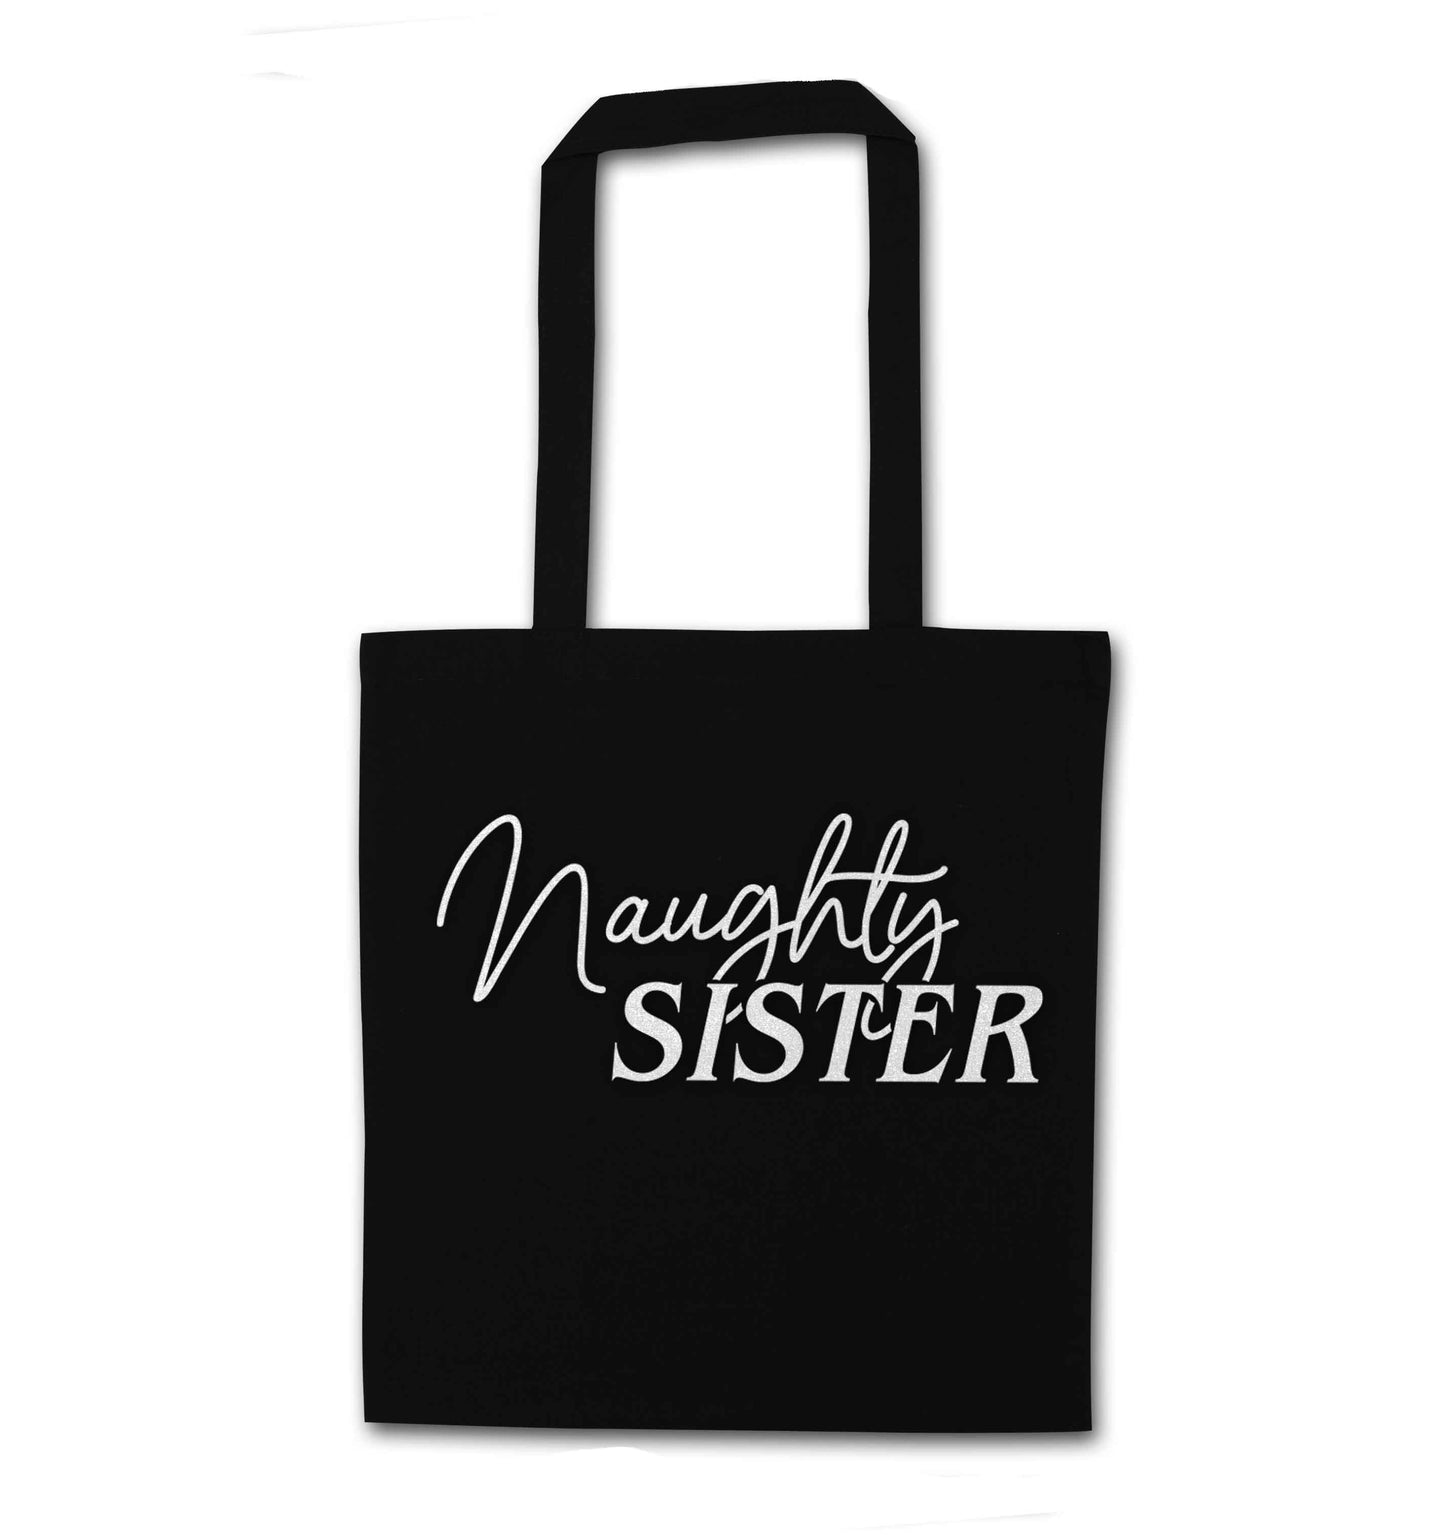 Naughty Sister black tote bag